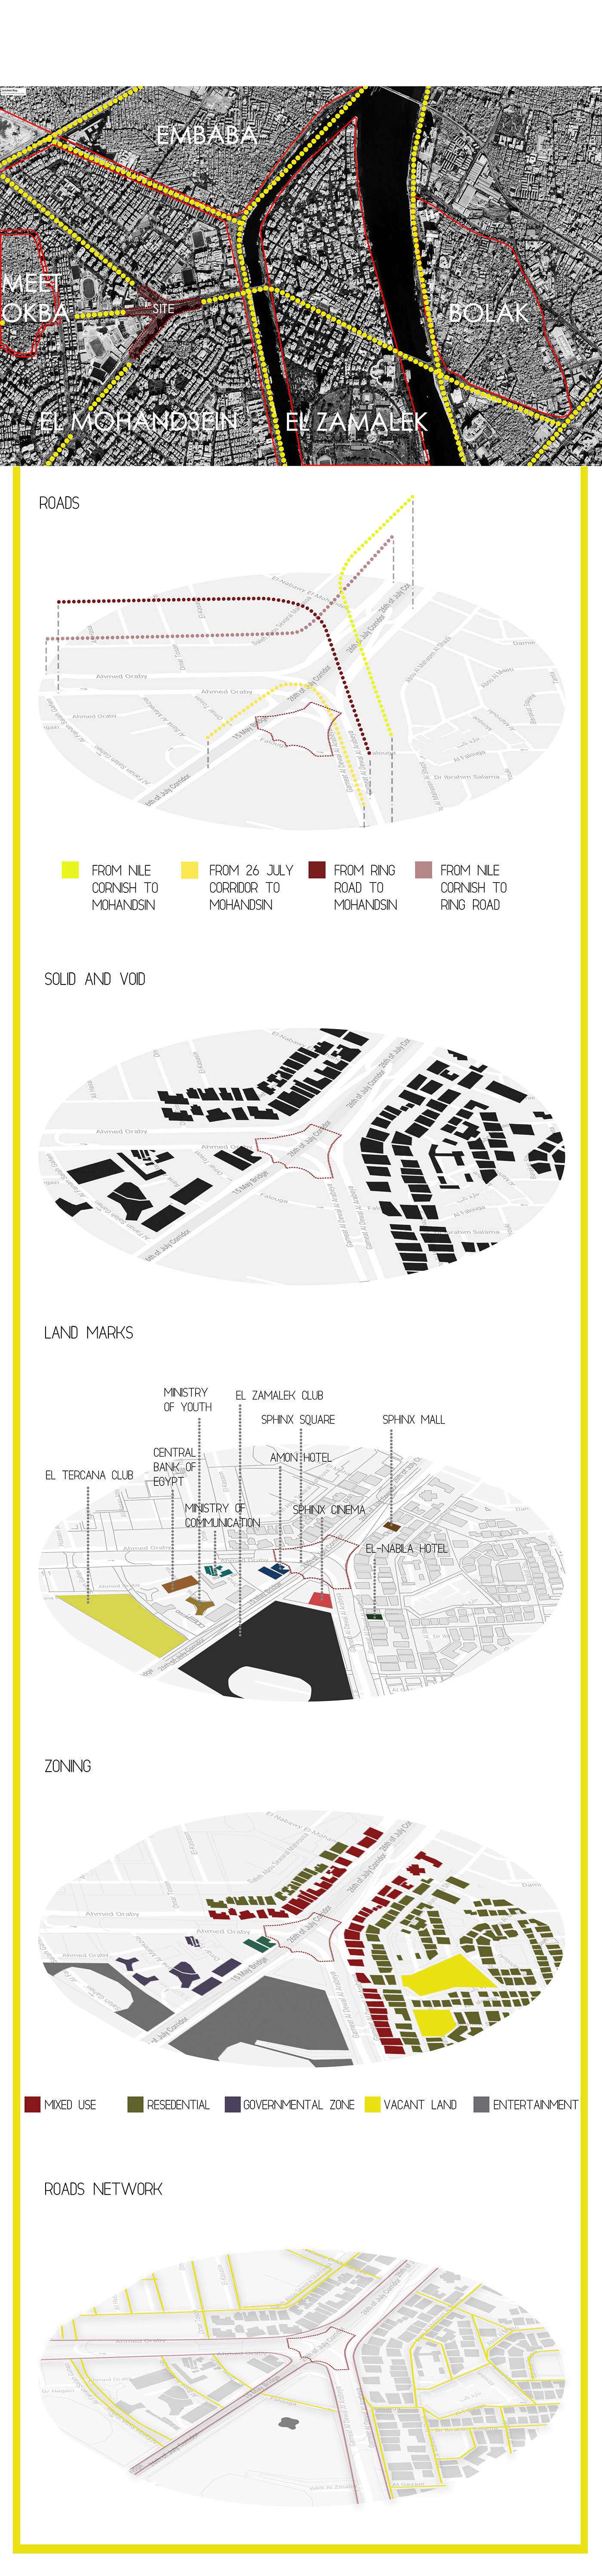 Urban urbanism   Street Vendors social mobility redesigning Urban Design Landscape